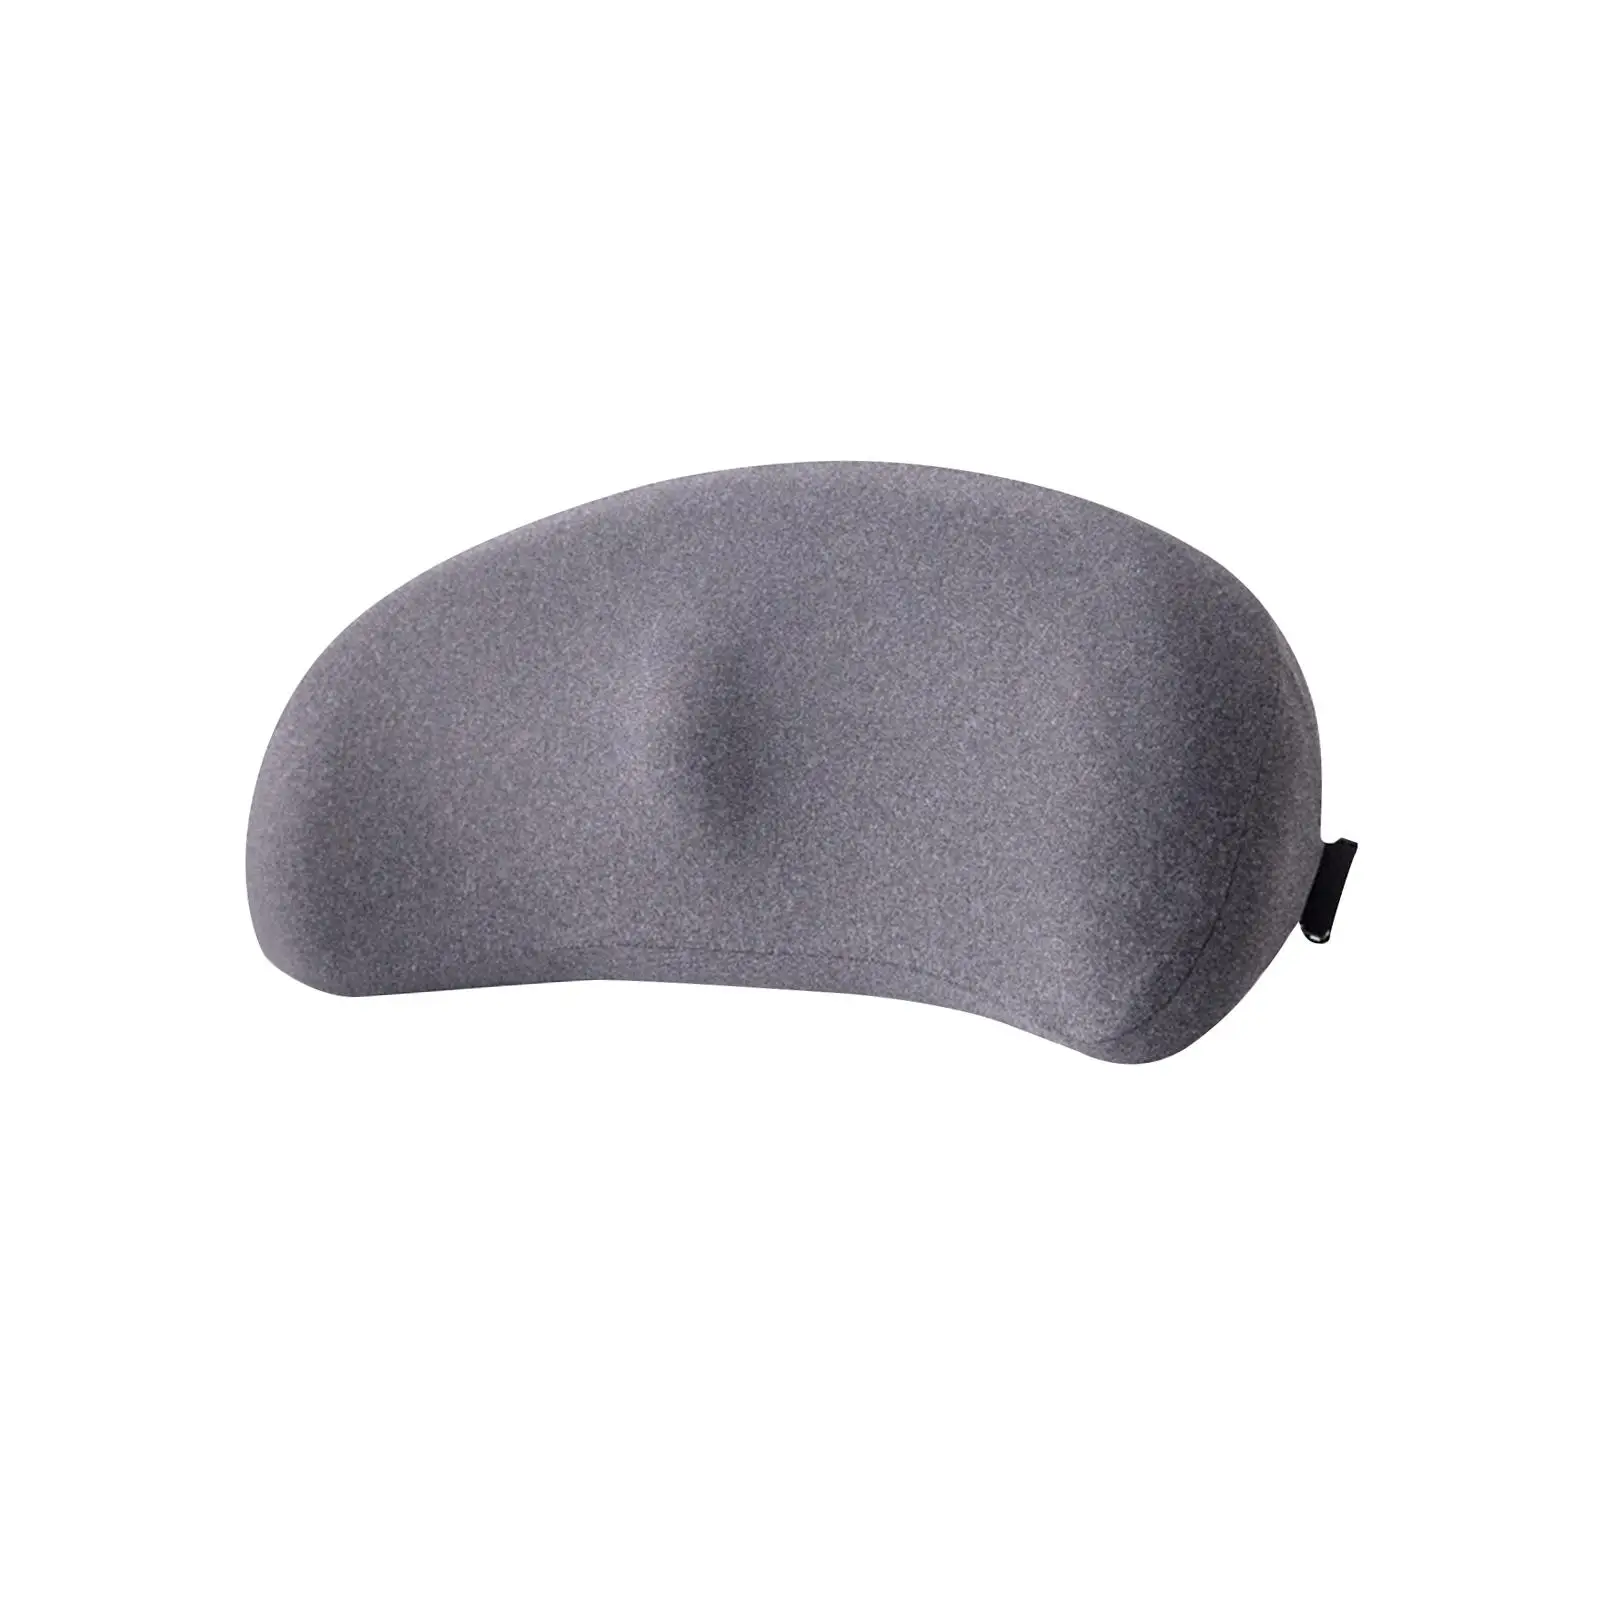 Lower Back Cushion Multipurpose Memory Foam Ergonomic Lumbar Support Pillow for recliner Home Travel Sleeping Rest Car Driver